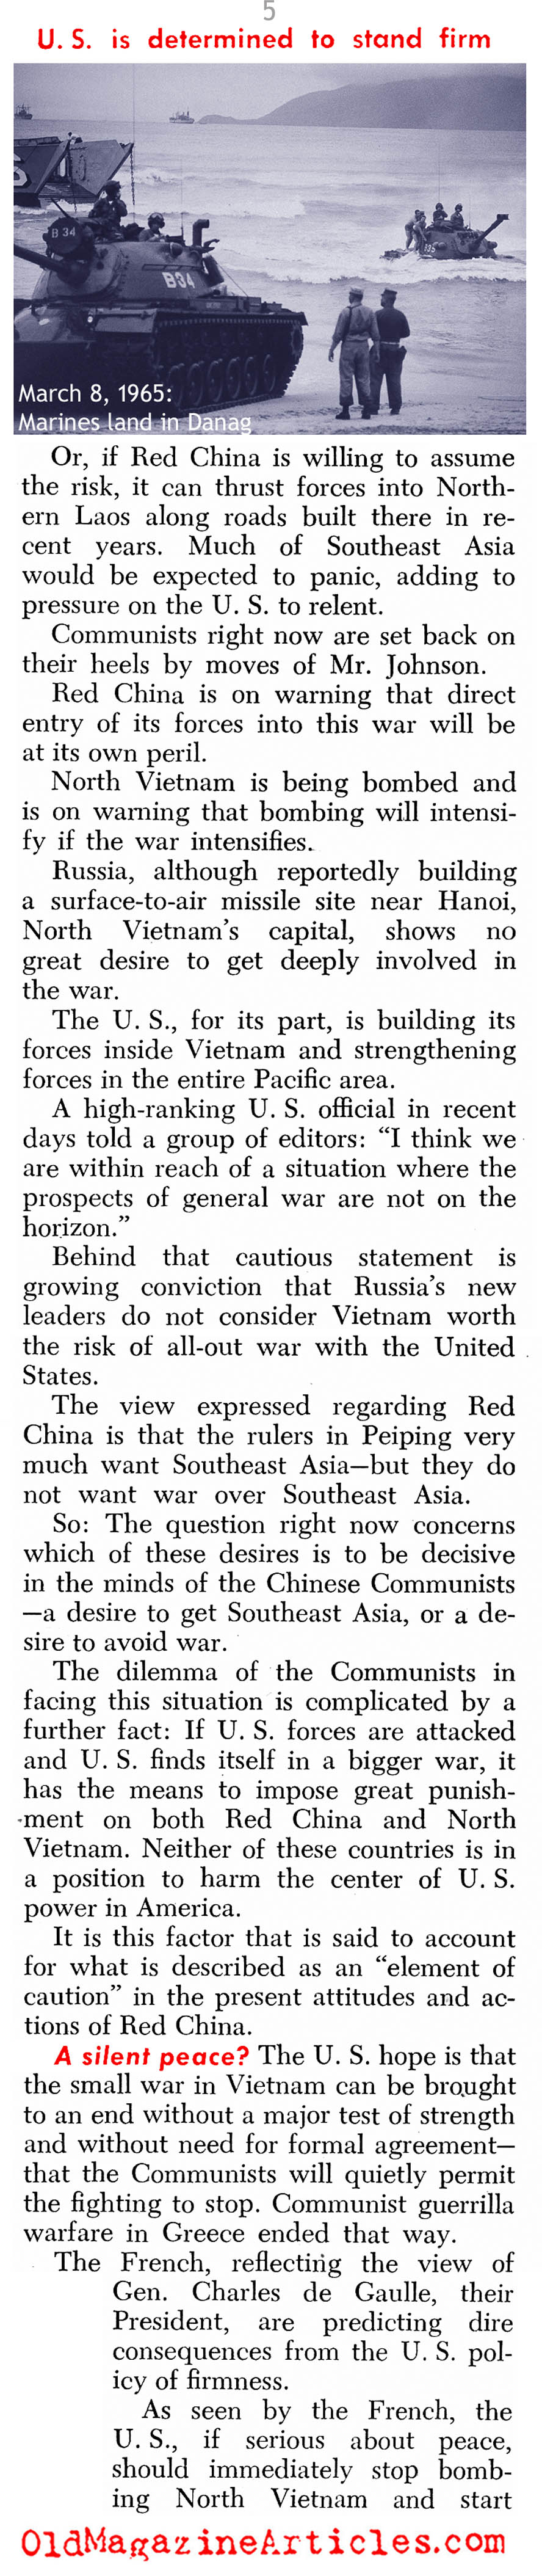 American Resolve Made Manifest  (U.S. News & World Report, 1965)